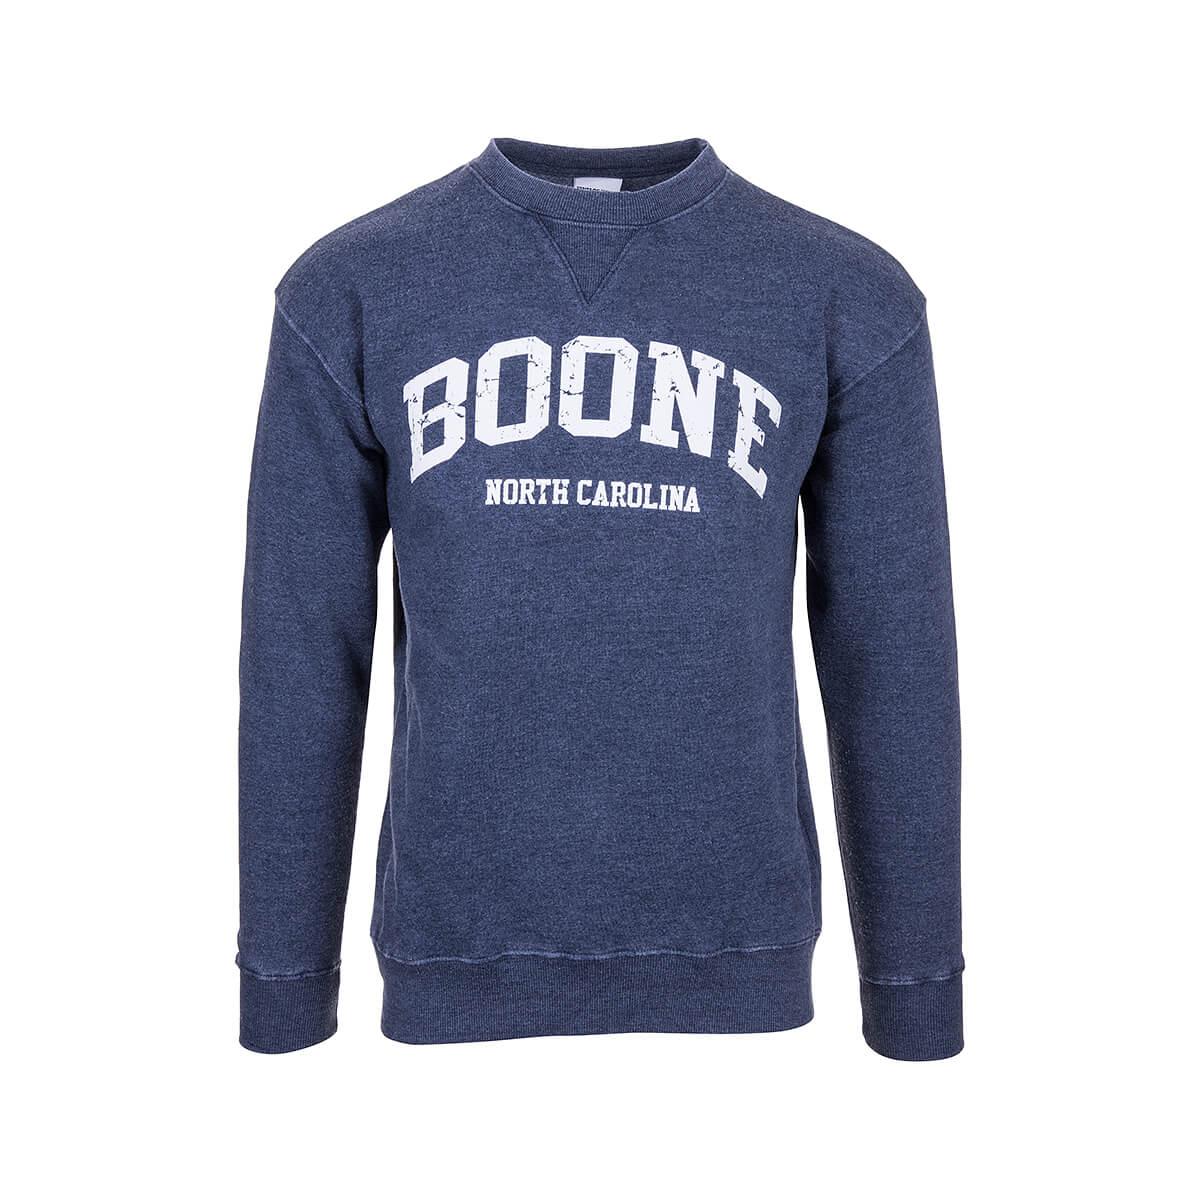  Mast General Store Boone Burn Wash Crew Sweatshirt